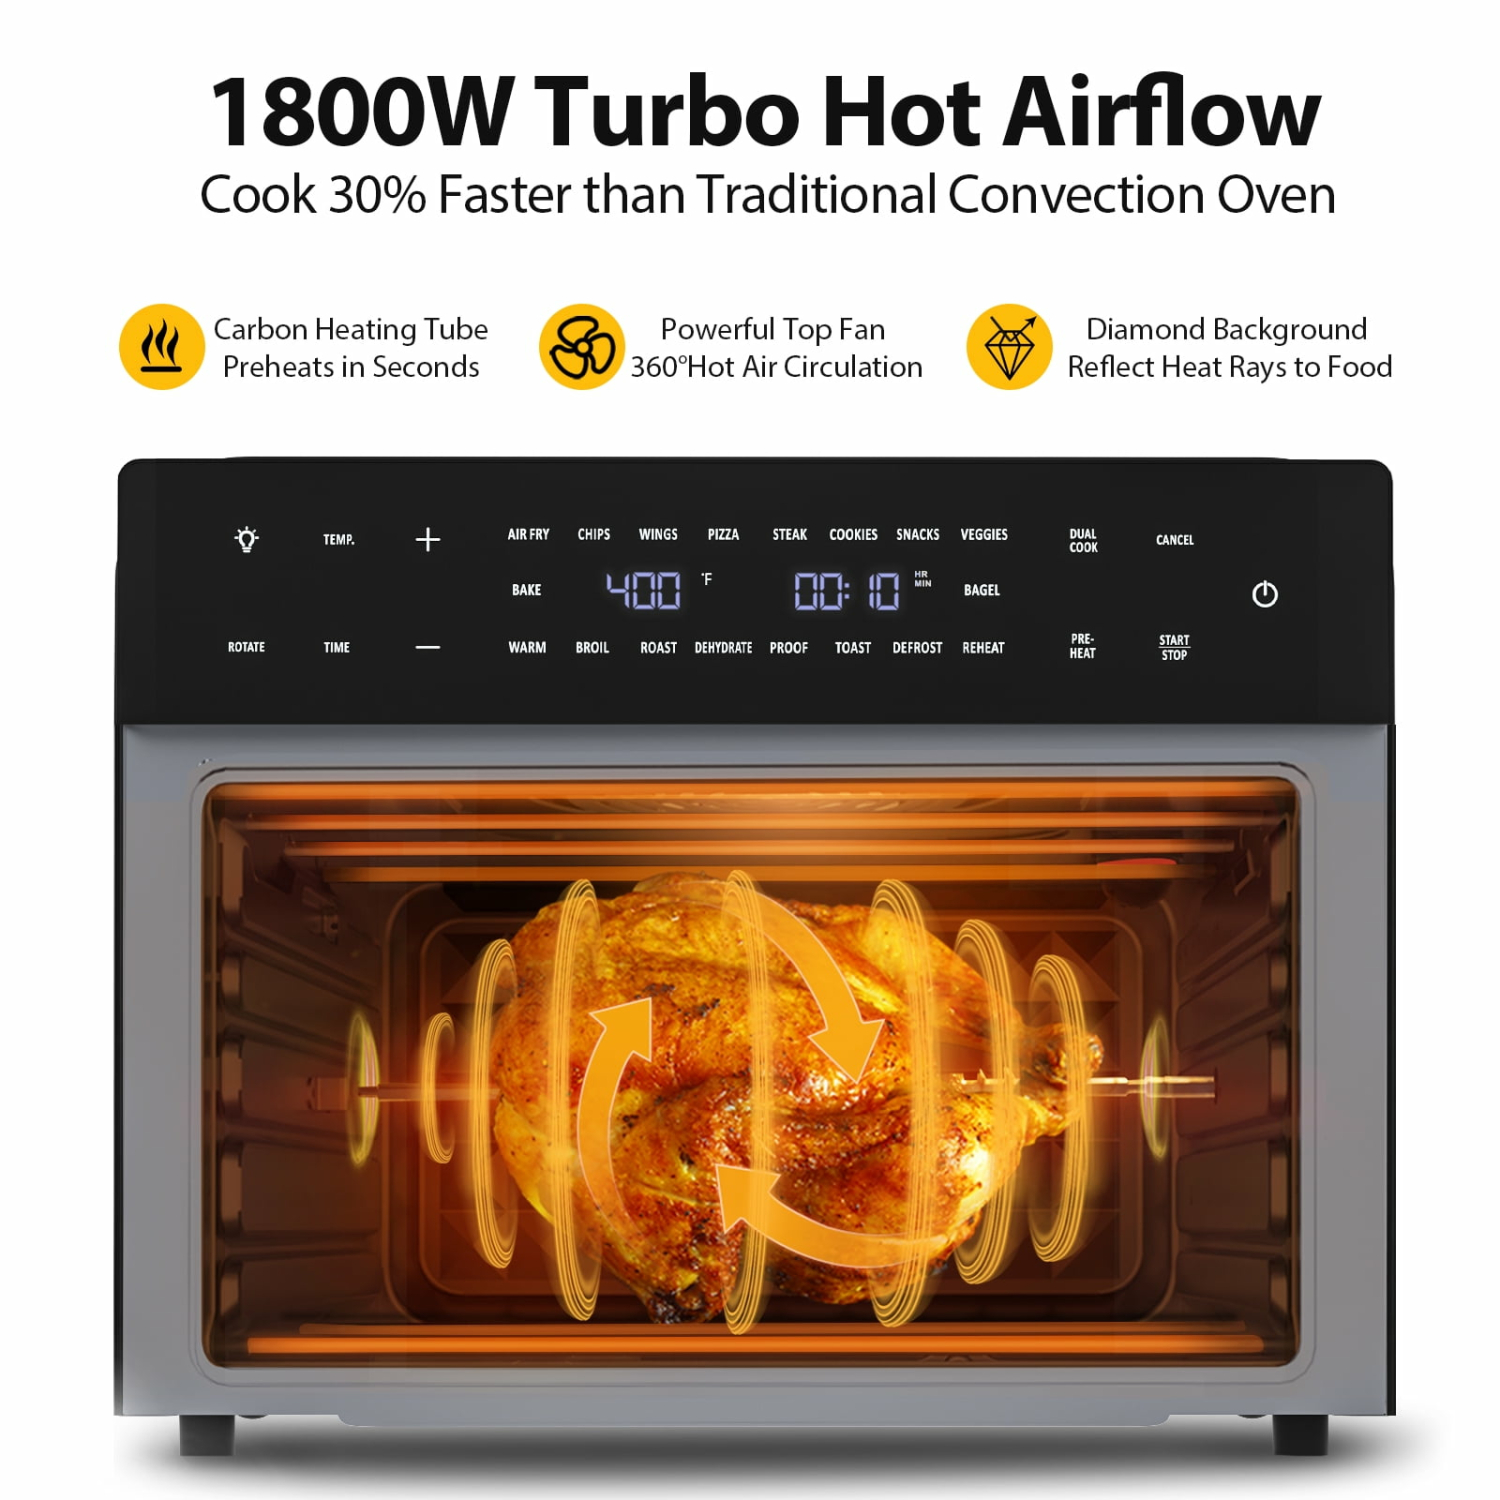 Beelicious 32 Qt XL 1800w Air Fryer Toaster Oven, Rotisserie, Dehydrator Combo